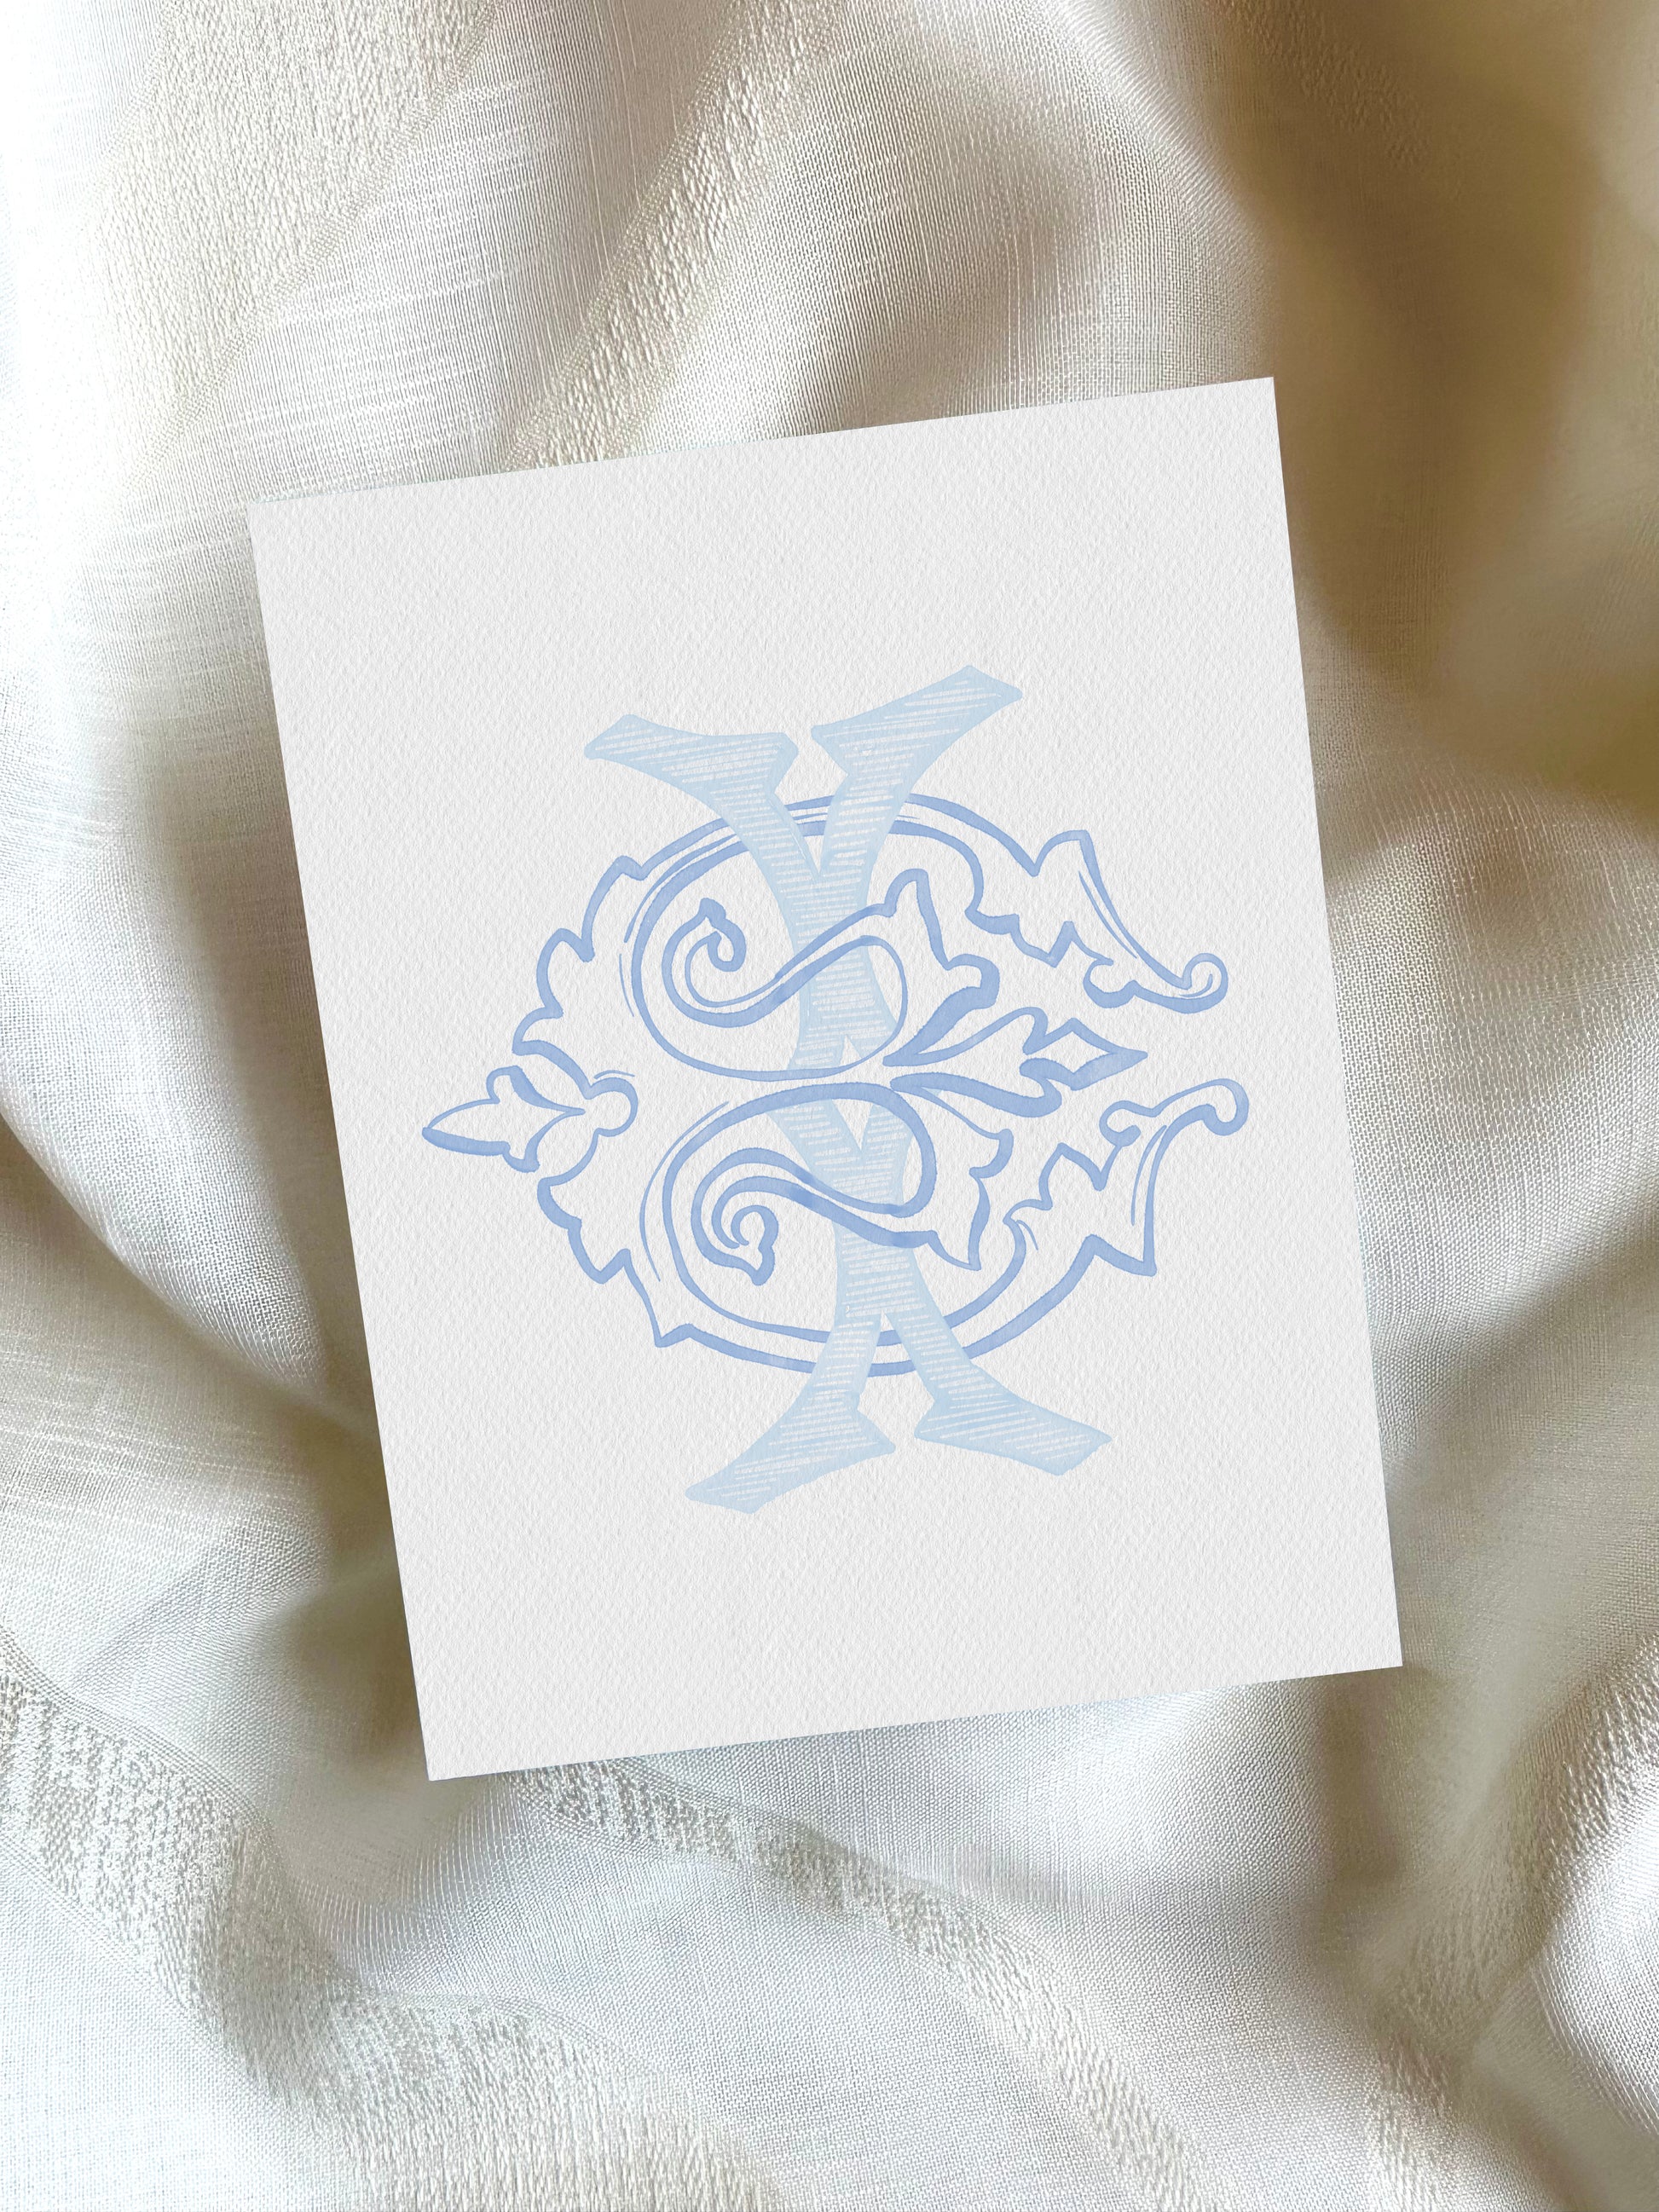 2 Letter Monogram with Letters EI IE | Digital Download - Wedding Monogram SVG, Personal Logo, Wedding Logo for Wedding Invitations The Wedding Crest Lab